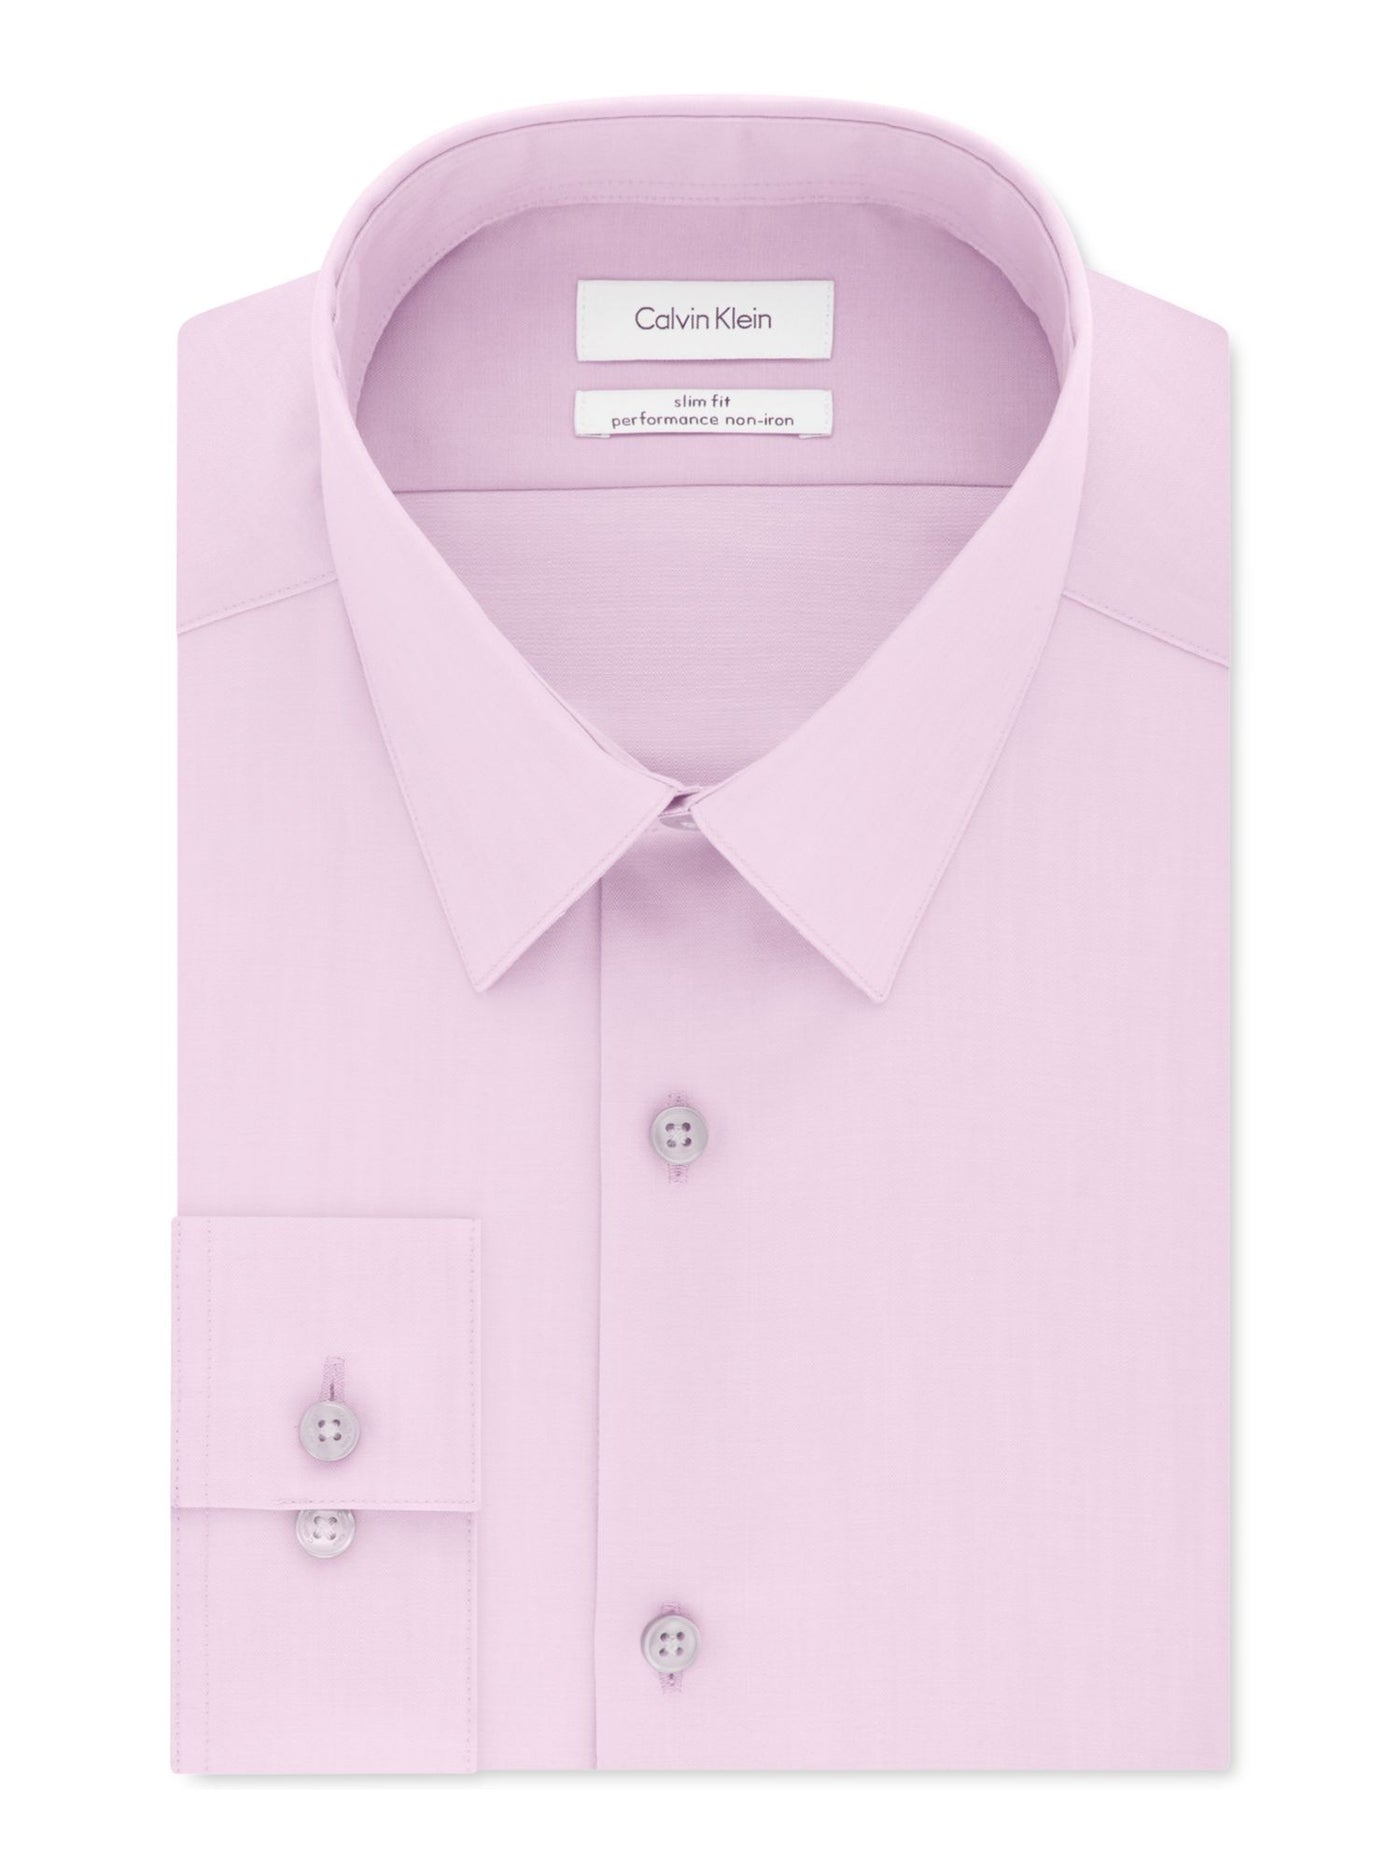 CALVIN KLEIN Mens Pink Slim Fit Cotton Dress Shirt XL 17- 34/35